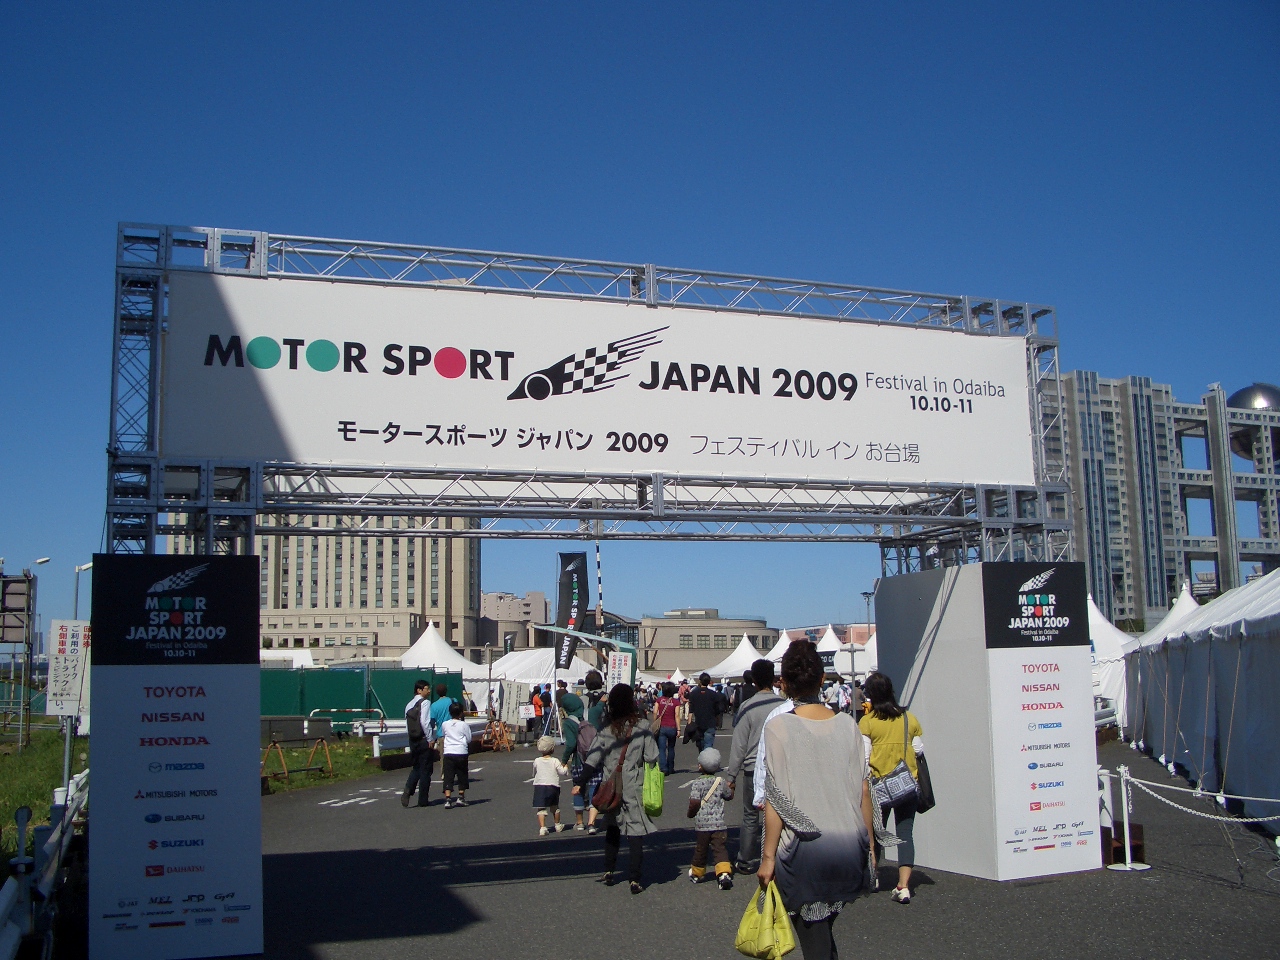 Motor sport JAPAN 2009